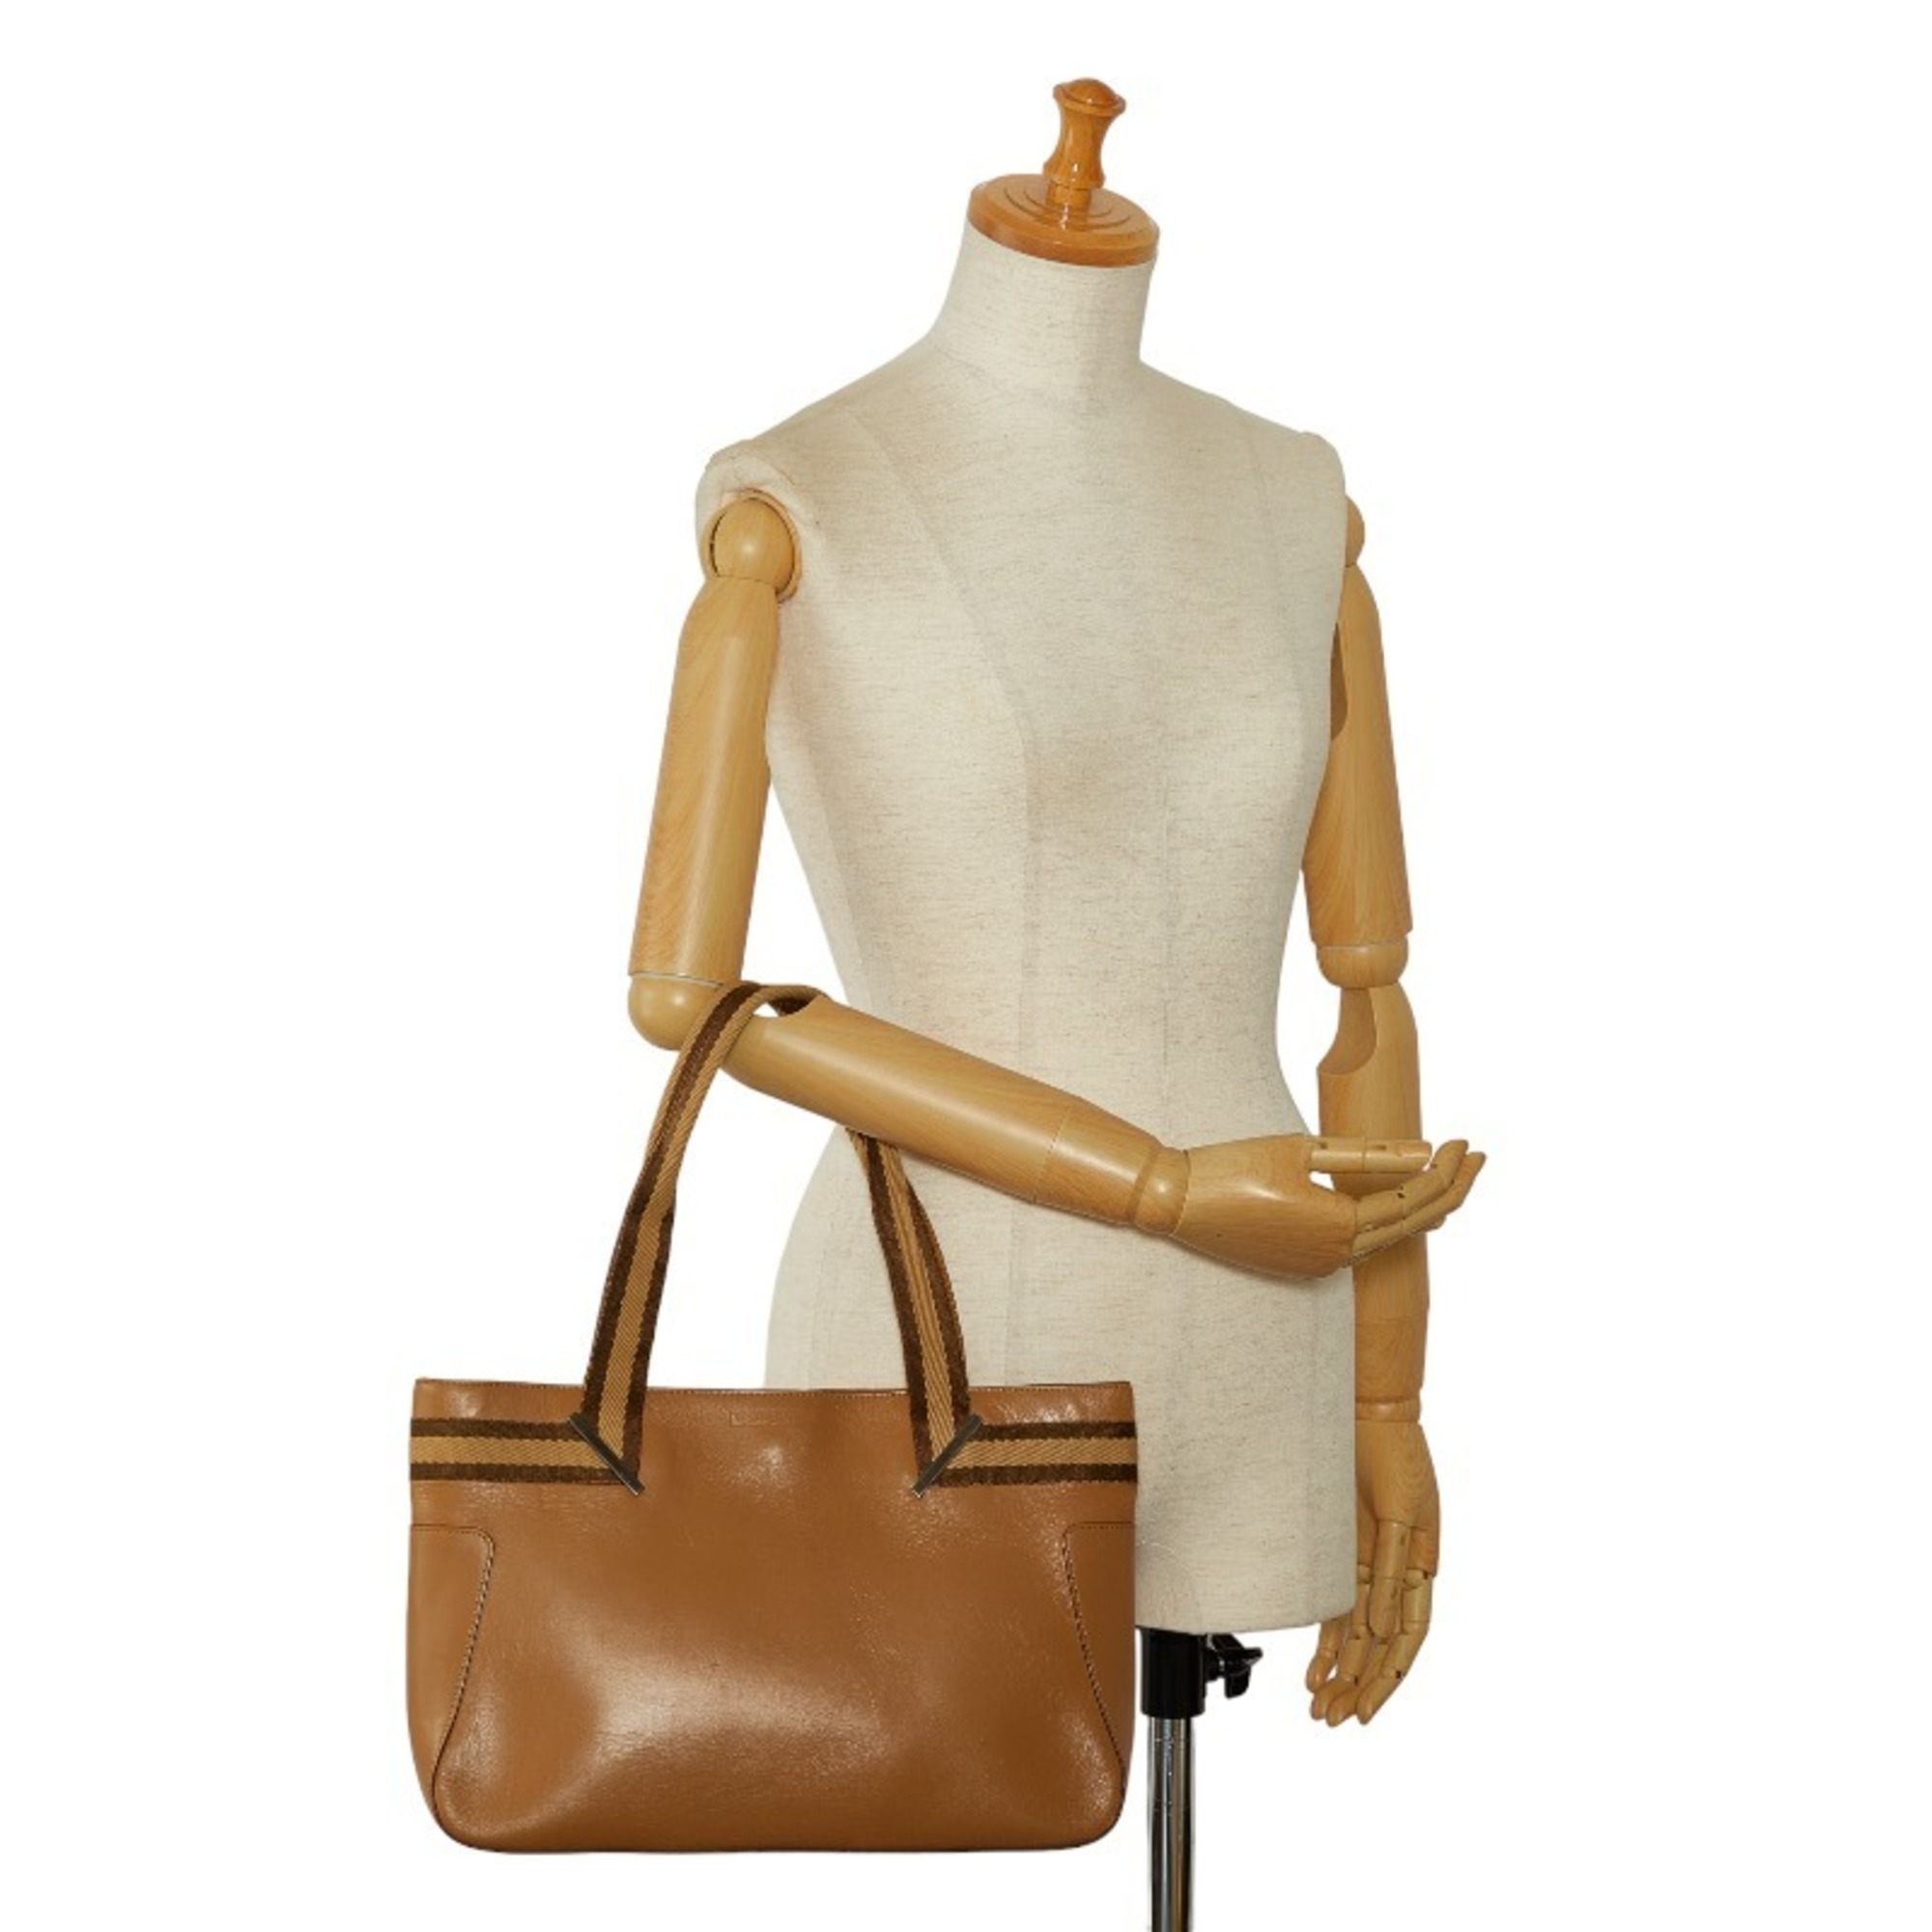 Gucci handbag 002 1135 brown leather ladies GUCCI